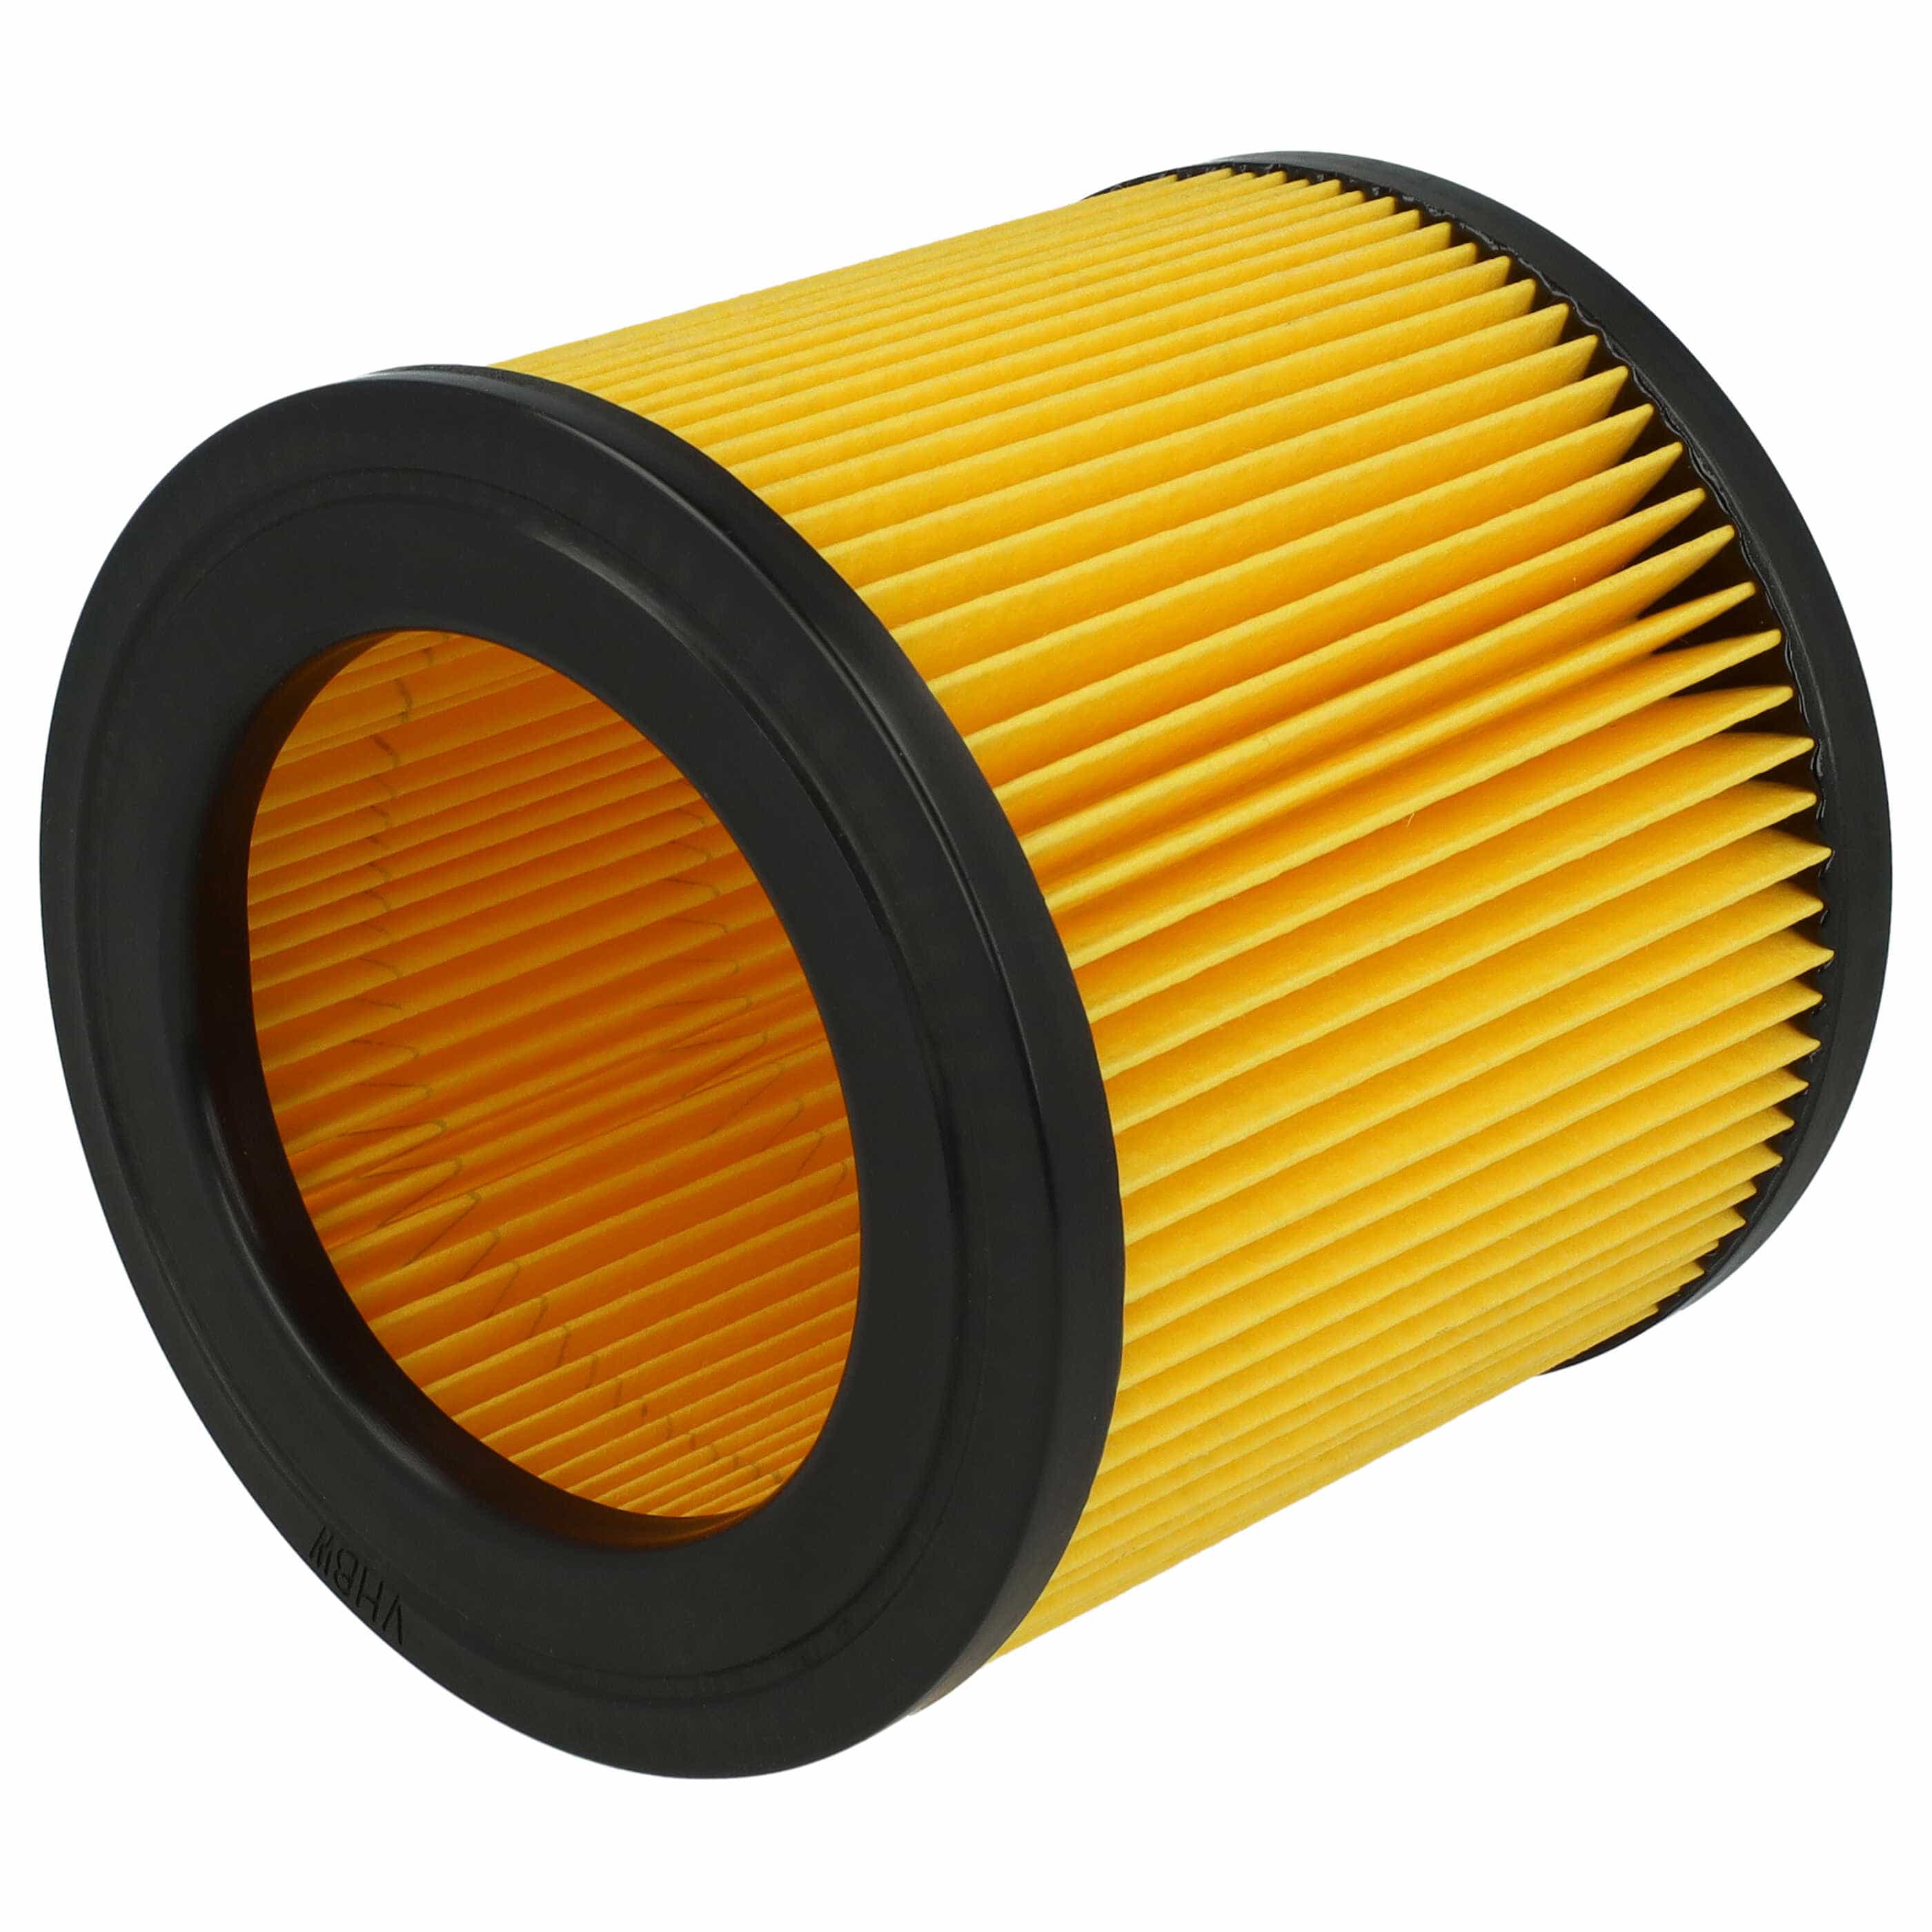 1x cartridge filter replaces Topcraft K707F, R 693, K704F for Topcraft Vacuum Cleaner, orange